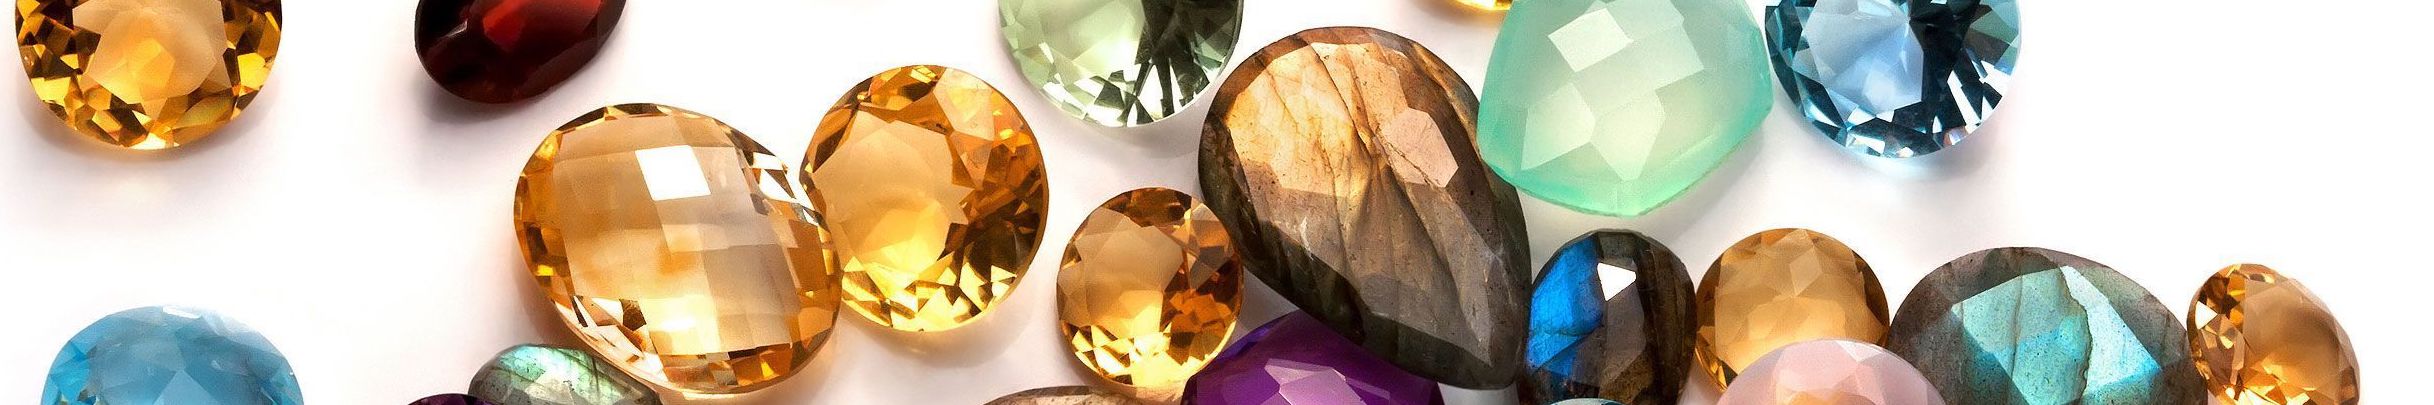 Gemstones Guide